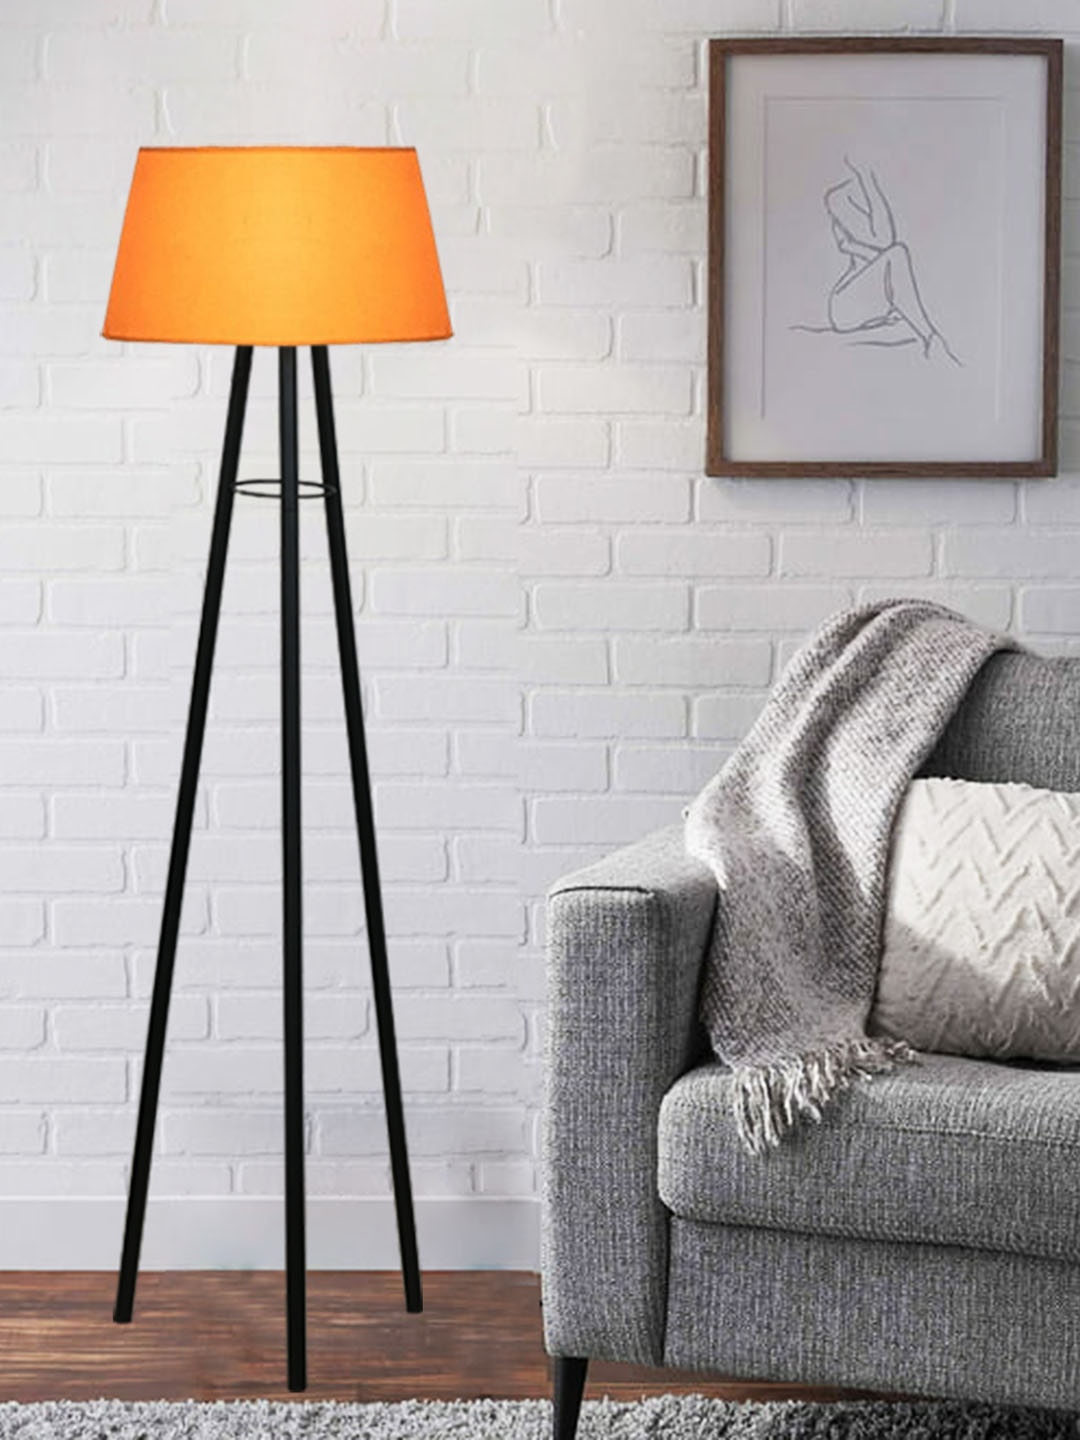 Homesake Orange & Black Solid Contemporary Tripod Lamp Shade